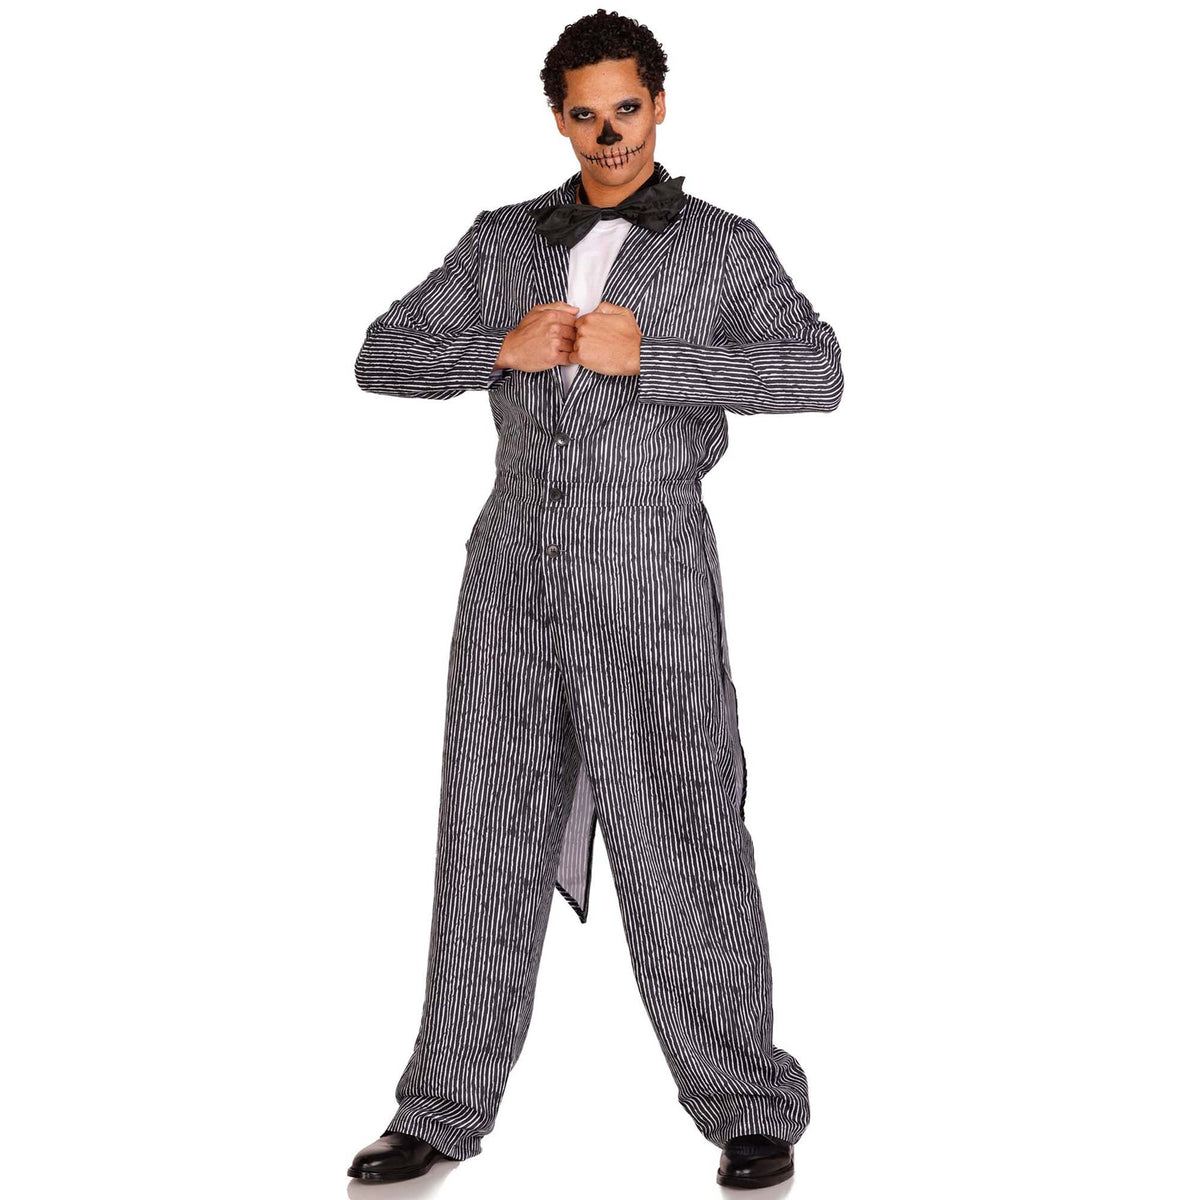 LEG AVENUE/SKU DISTRIBUTORS INC Costumes Pinstriped Tux Jumpsuit Costume for Adults